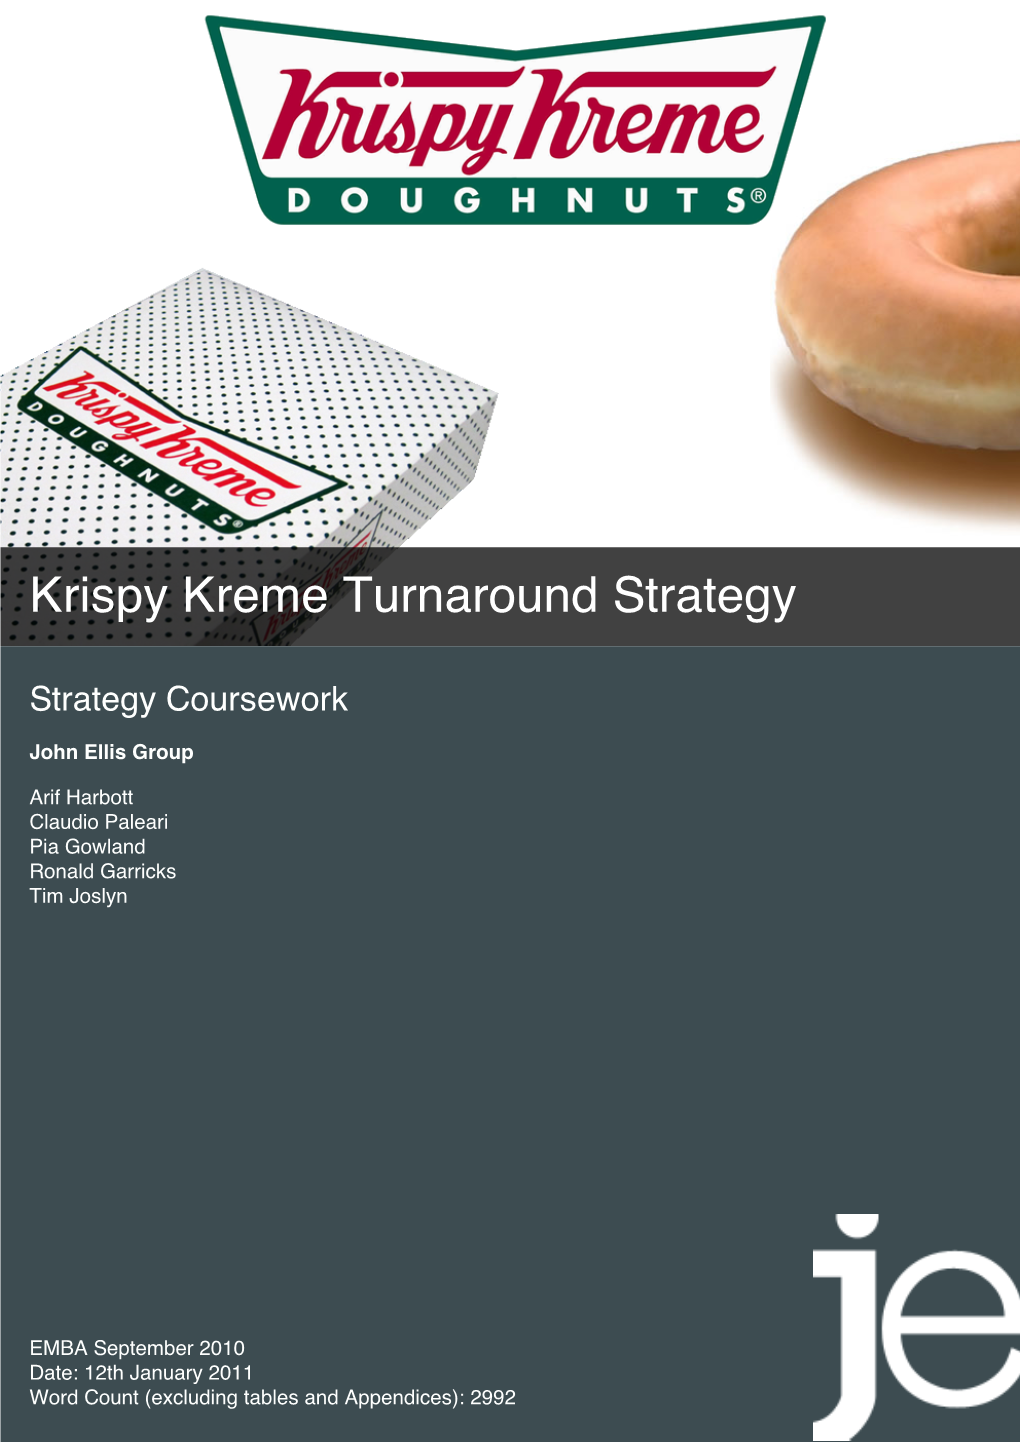 Krispy Kreme Turnaround Strategy